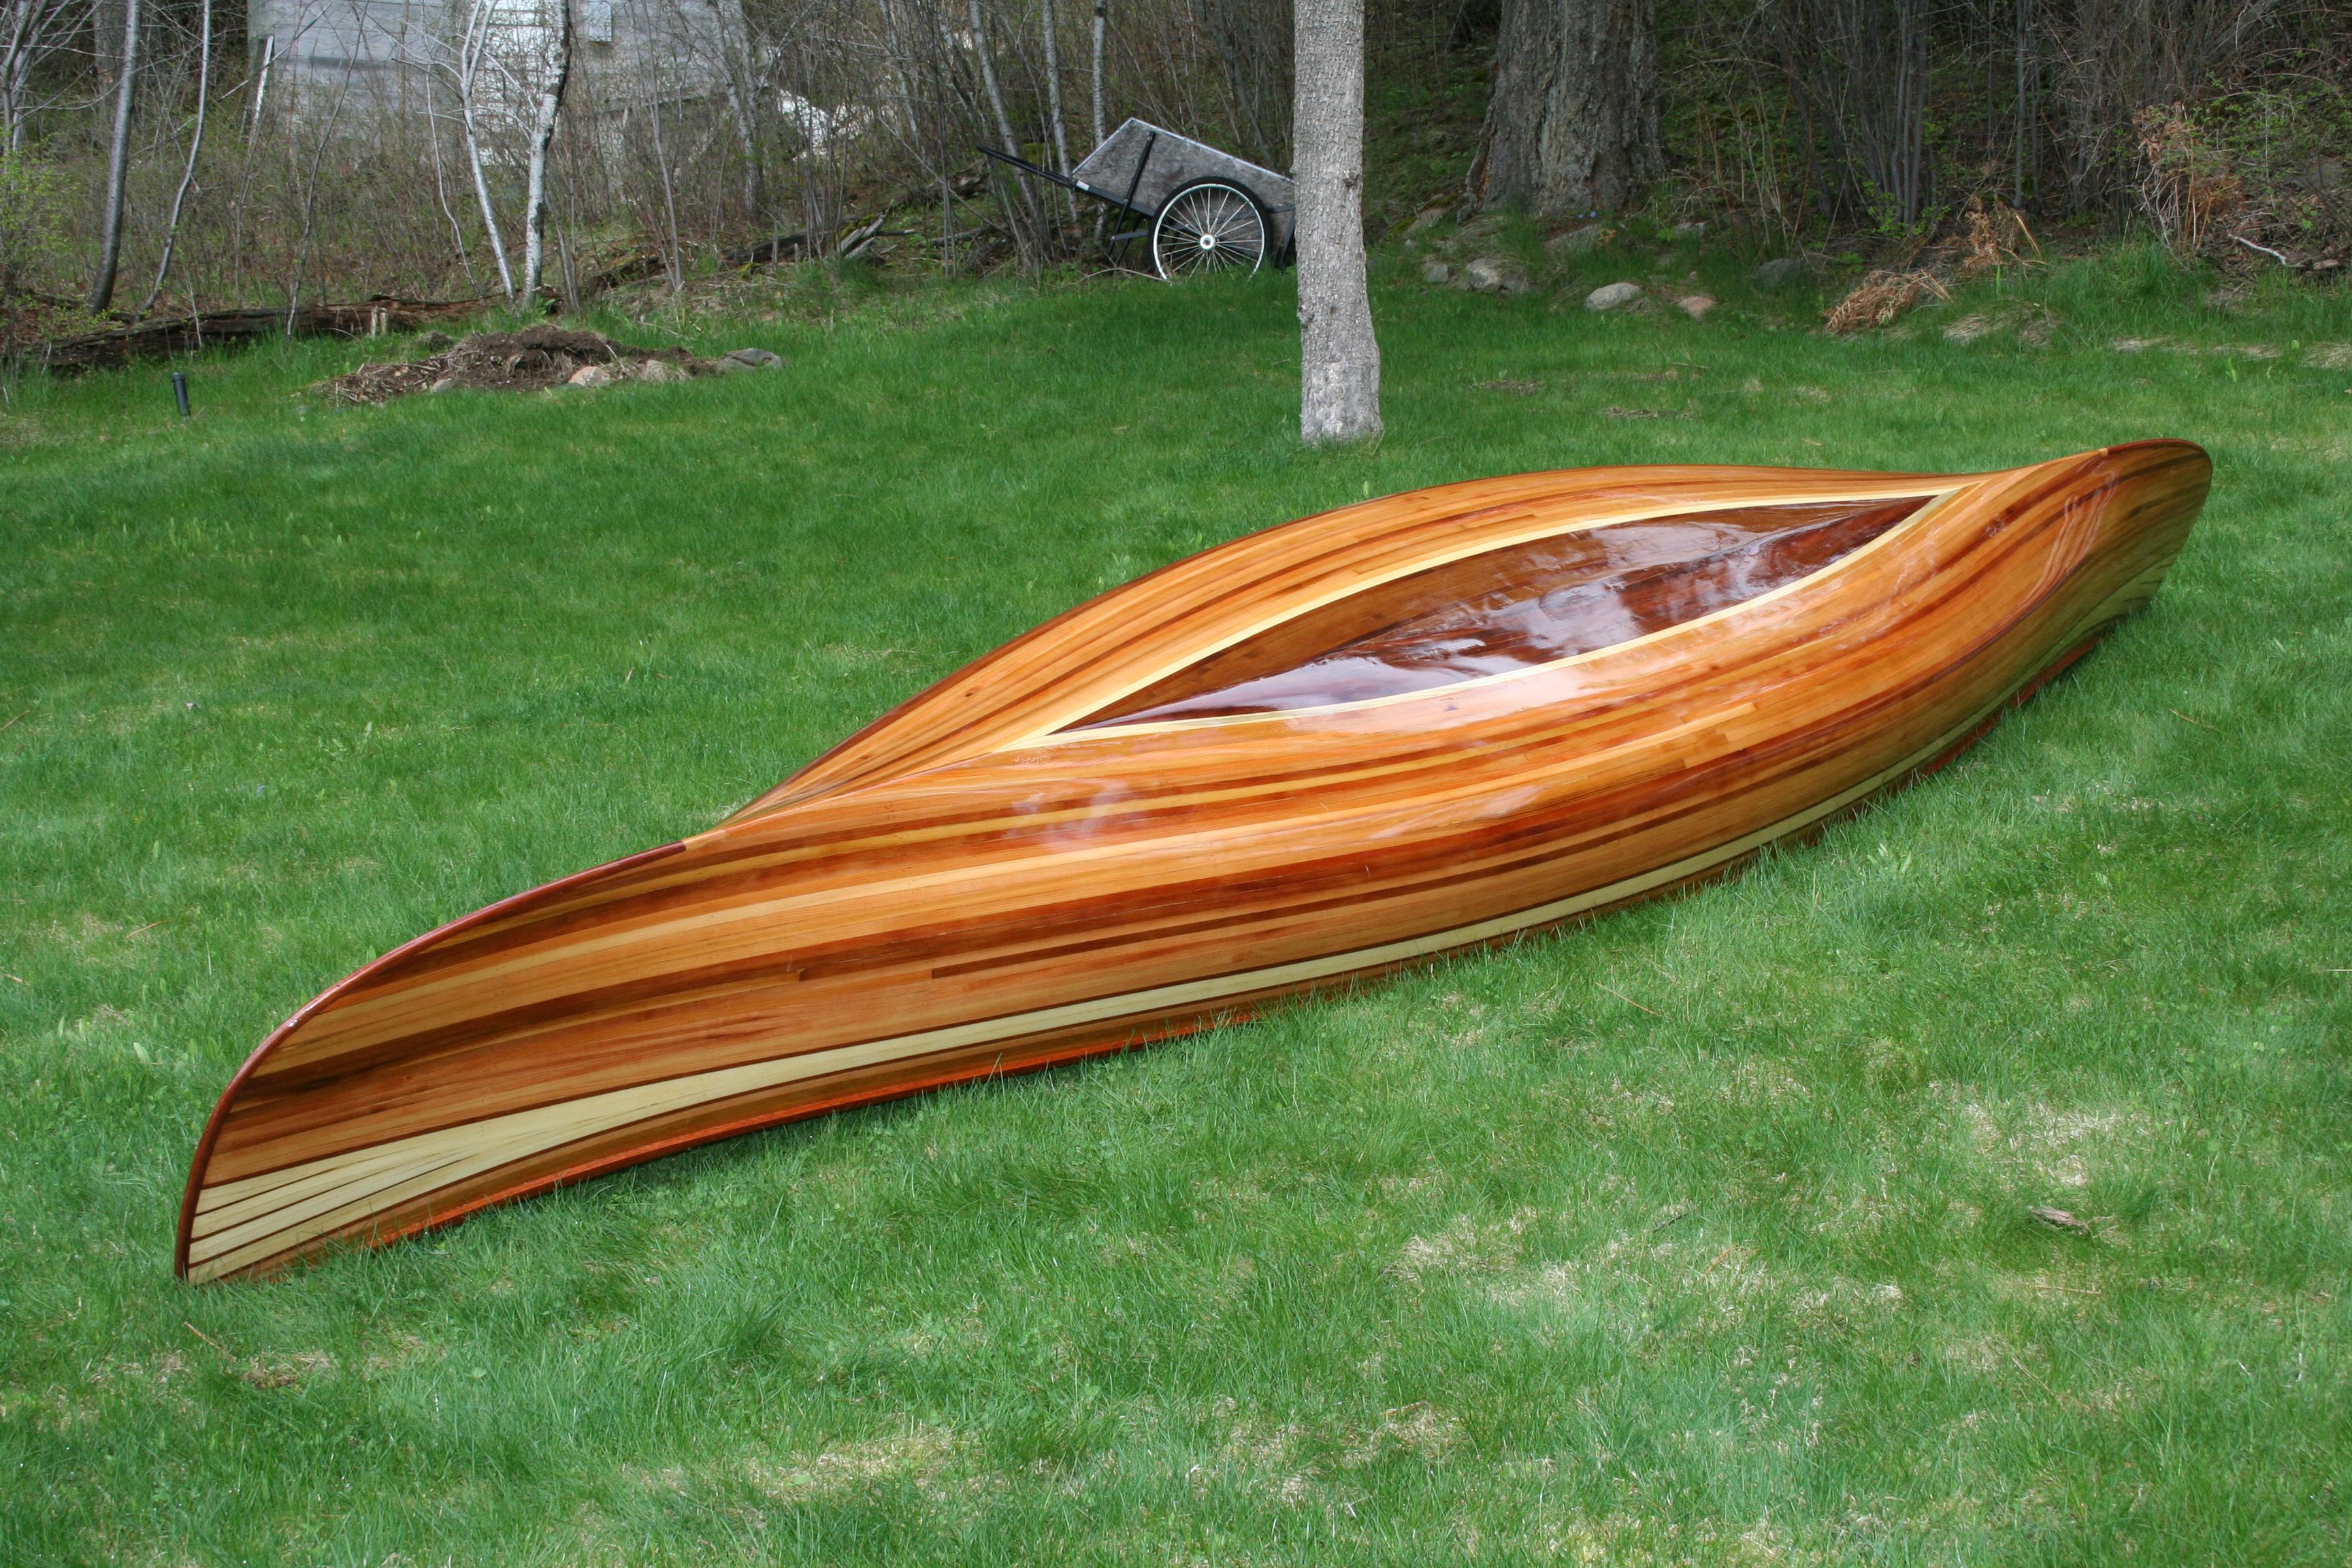 woodstrip kayak plans pdf woodworking